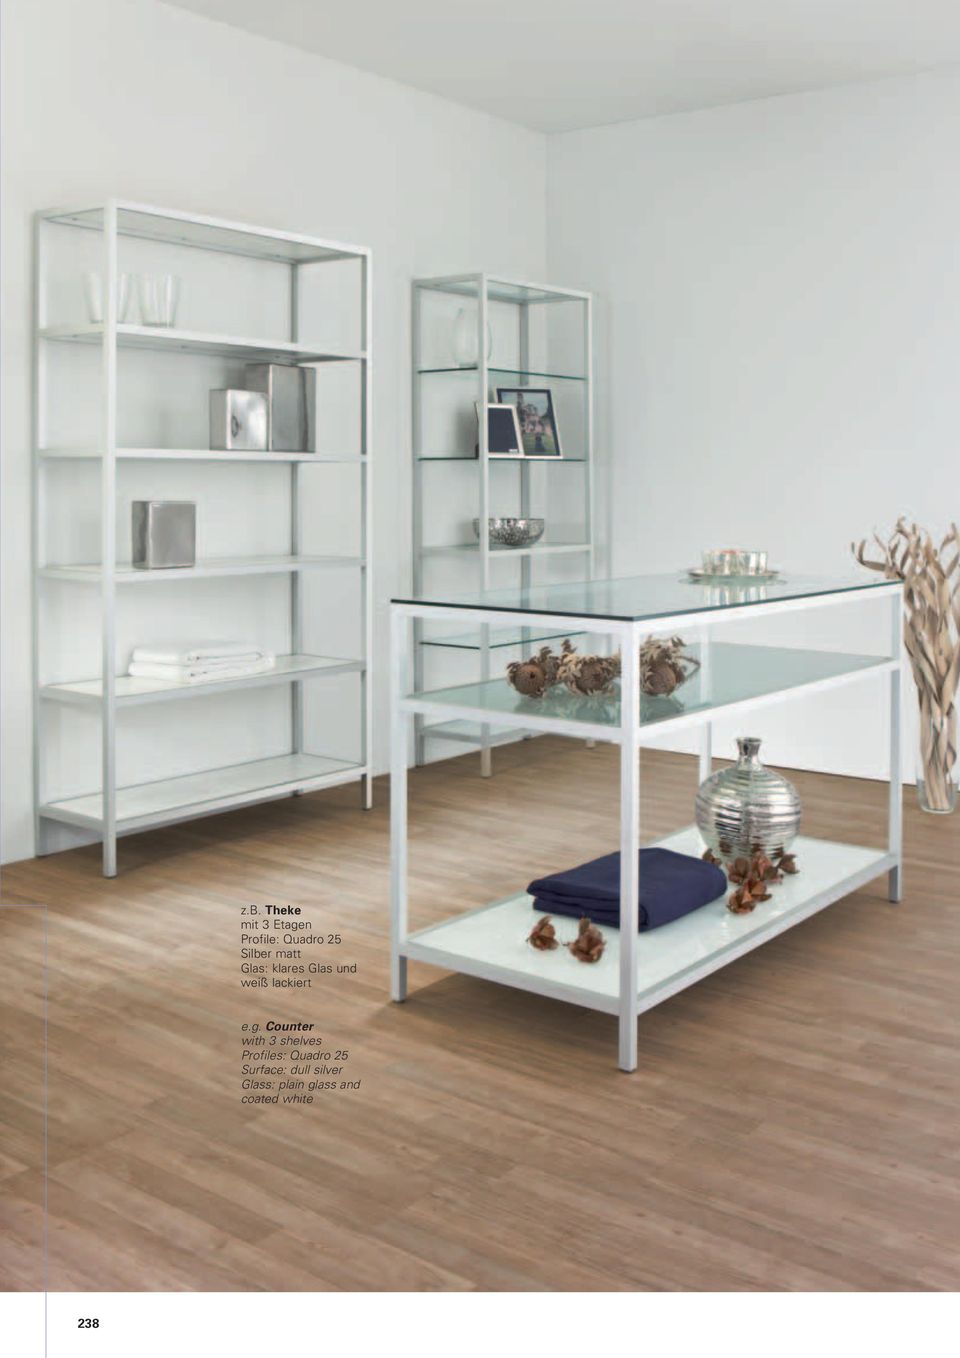 Counter with 3 shelves Profiles: Quadro 25